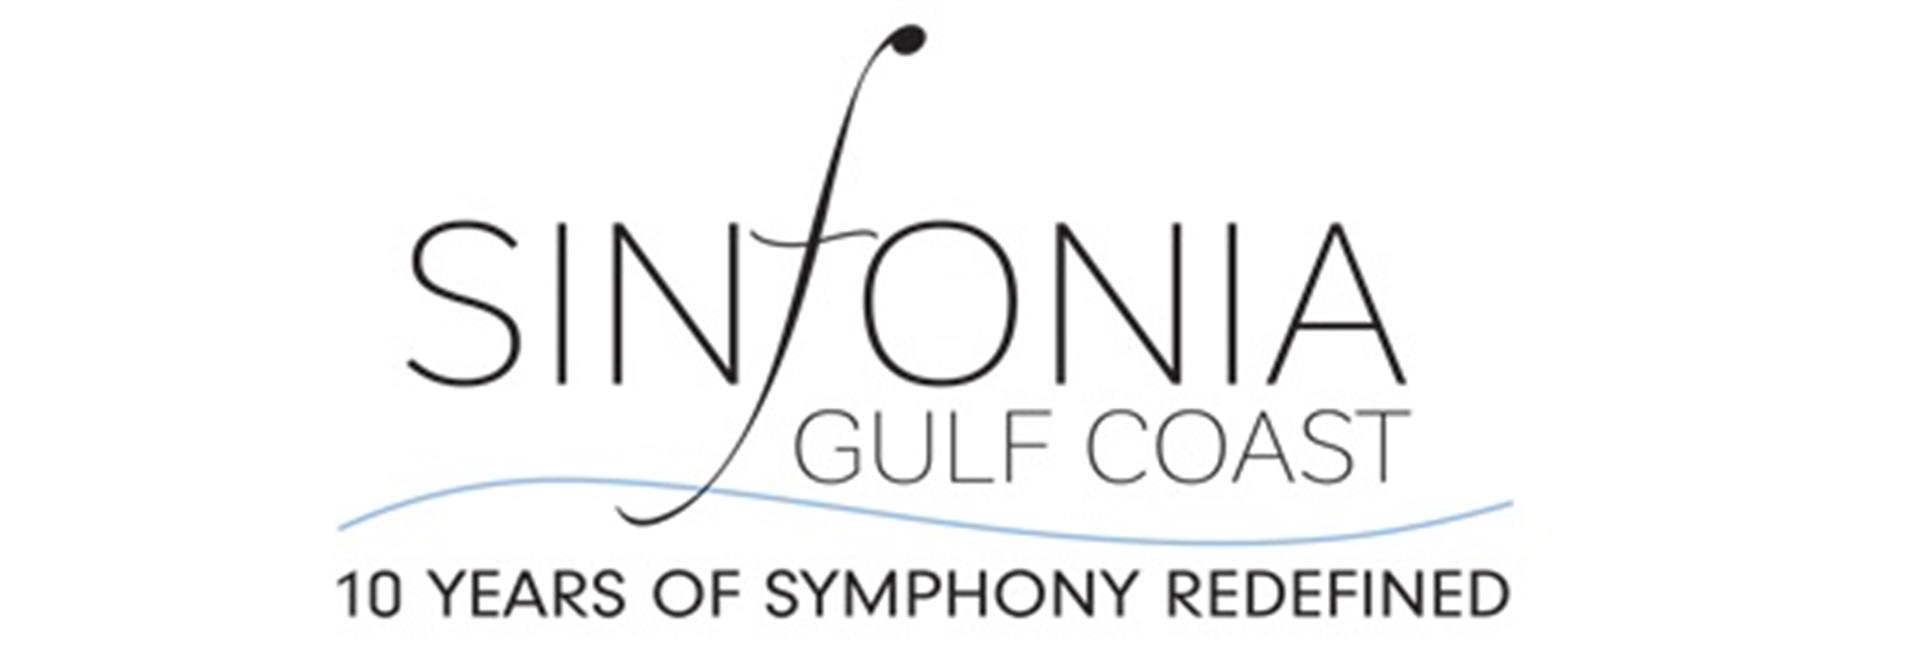 sinfonia gulf coast